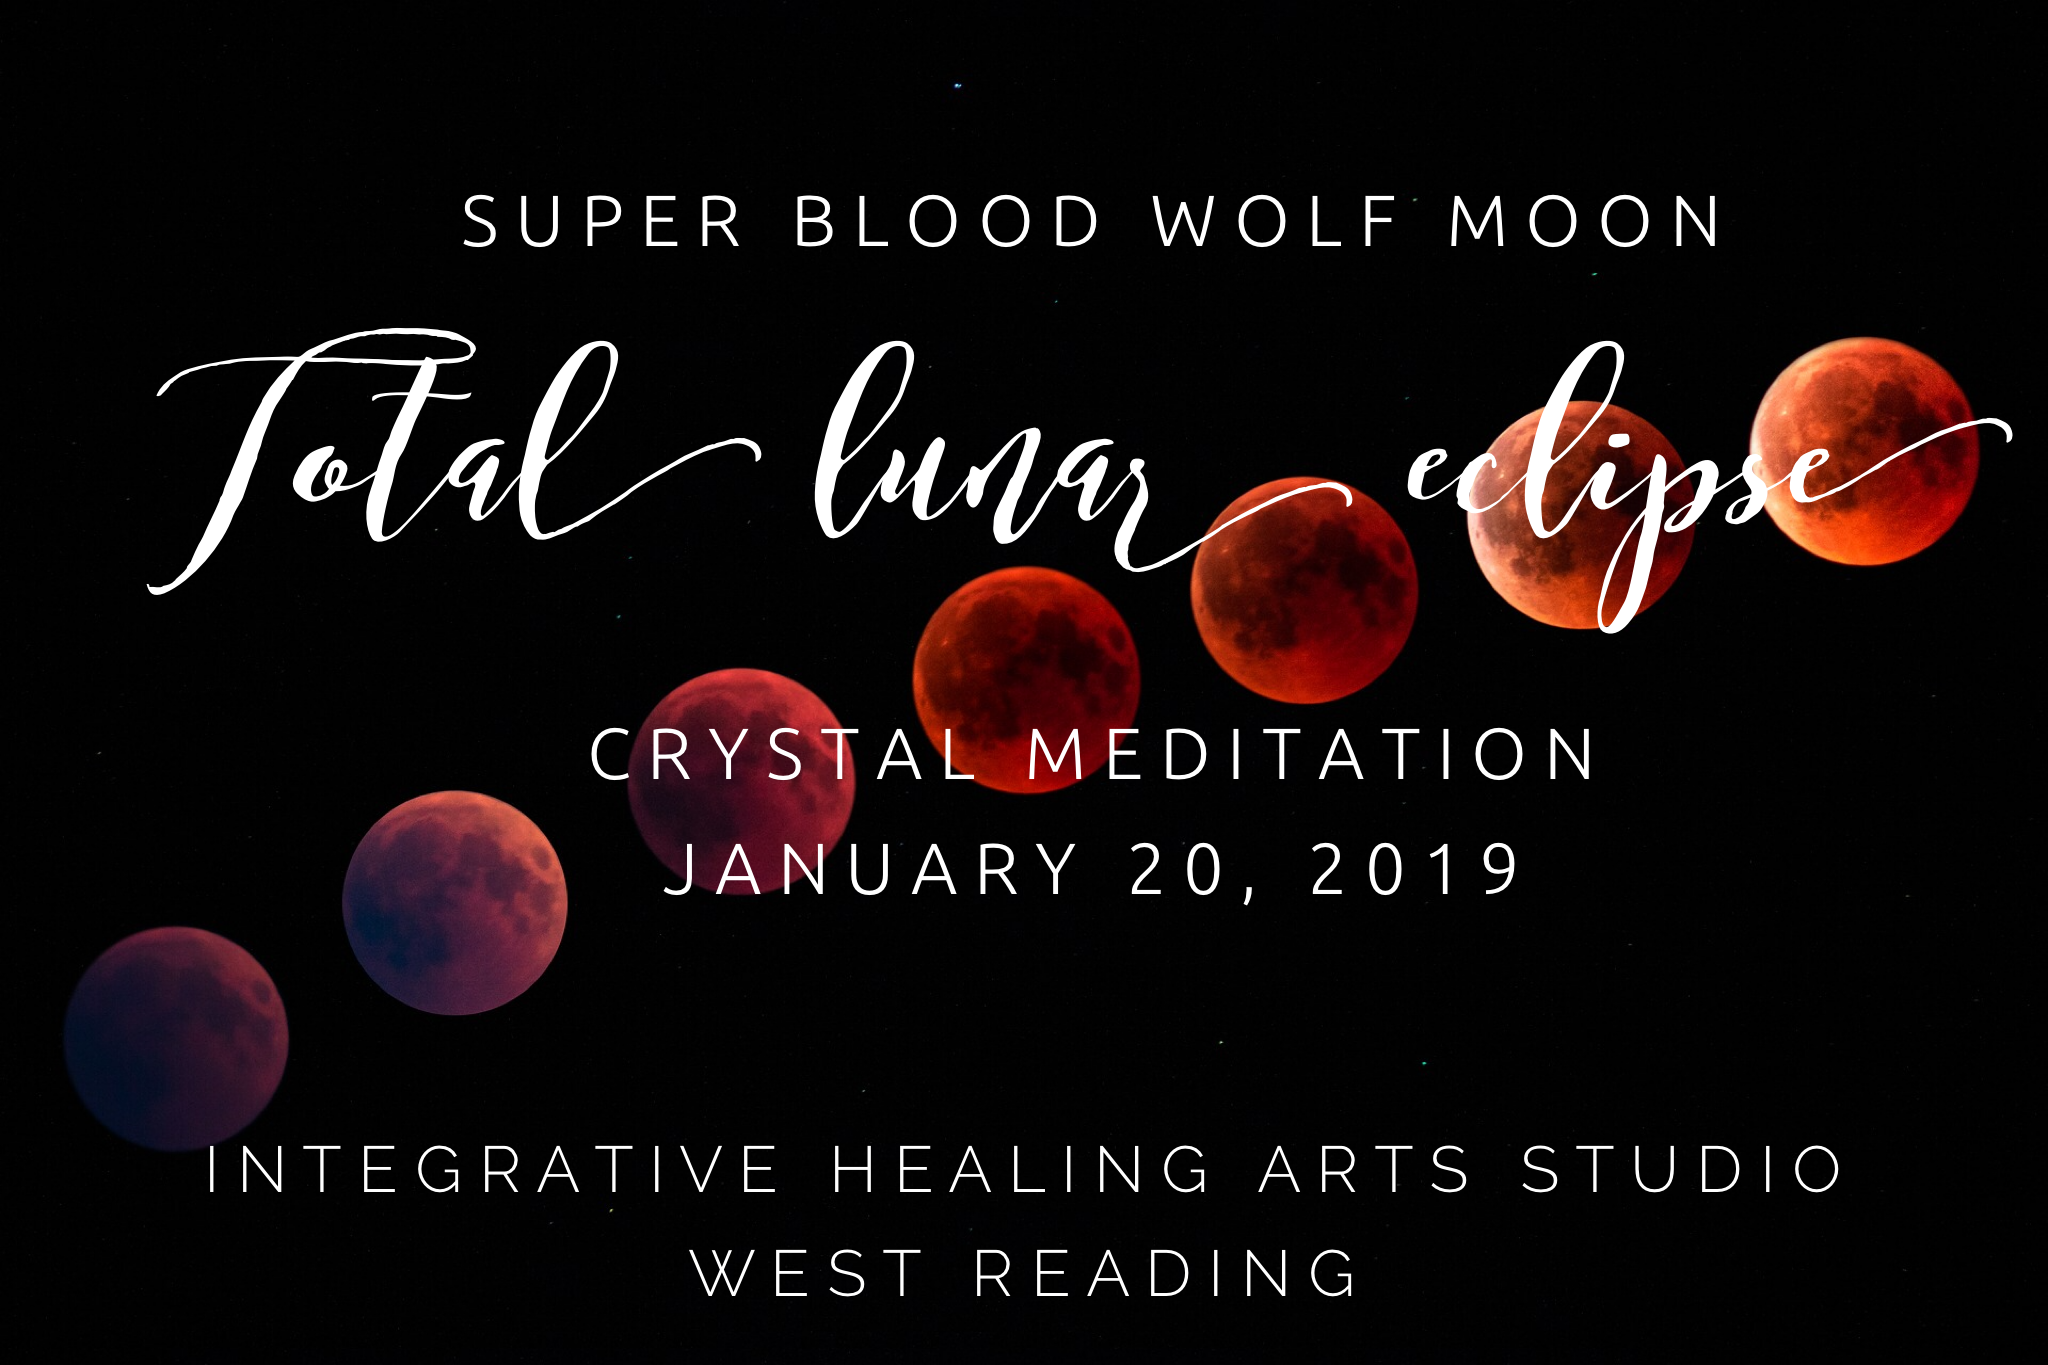 super blood wolf moon, supermoon, crystal meditation, full moon meditation, integrative healing arts studio, crystal healing